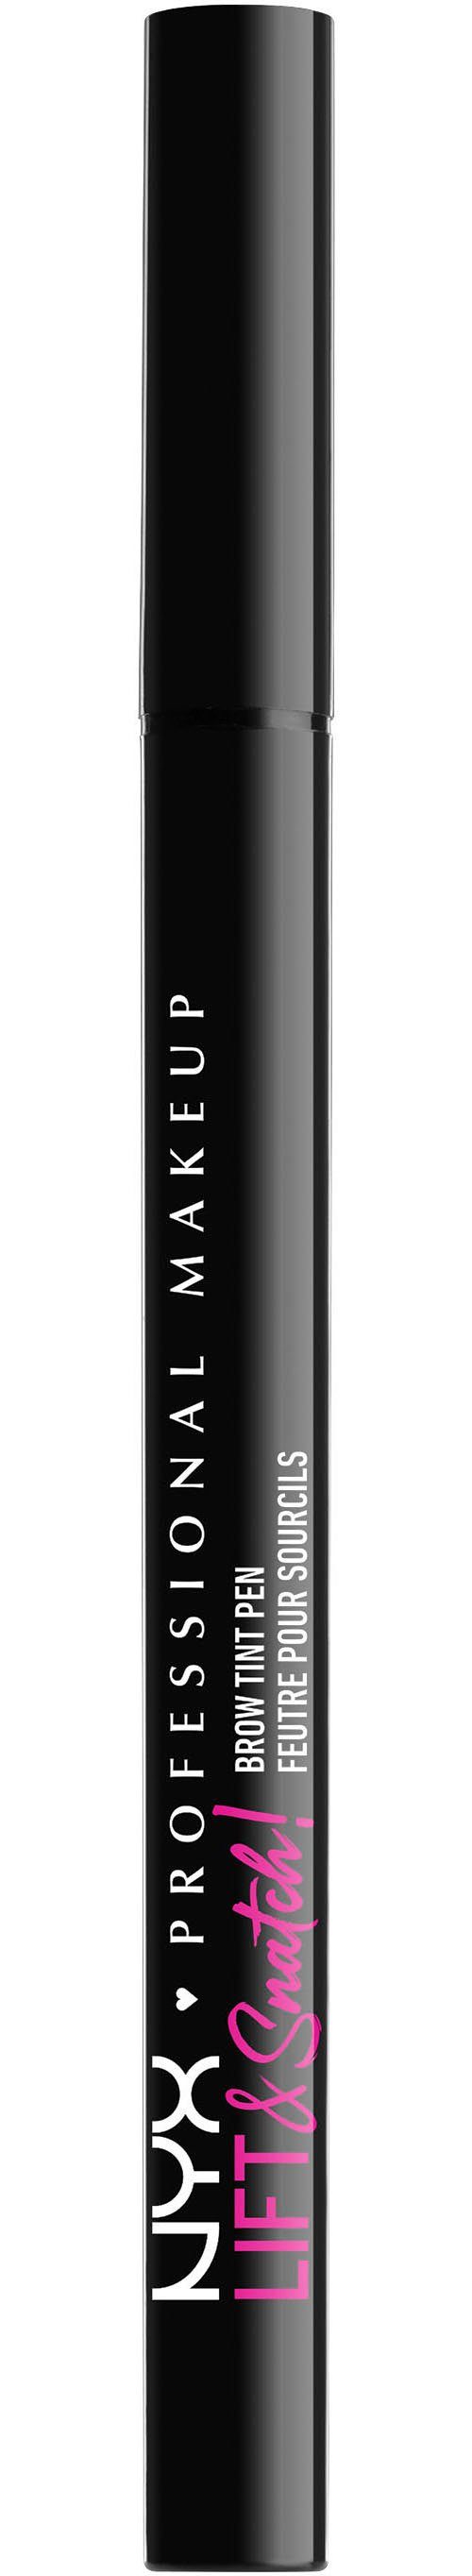 Lift Makeup NYX Professional ash Snatch Pen & Augenbrauen-Stift Brow Tint brown